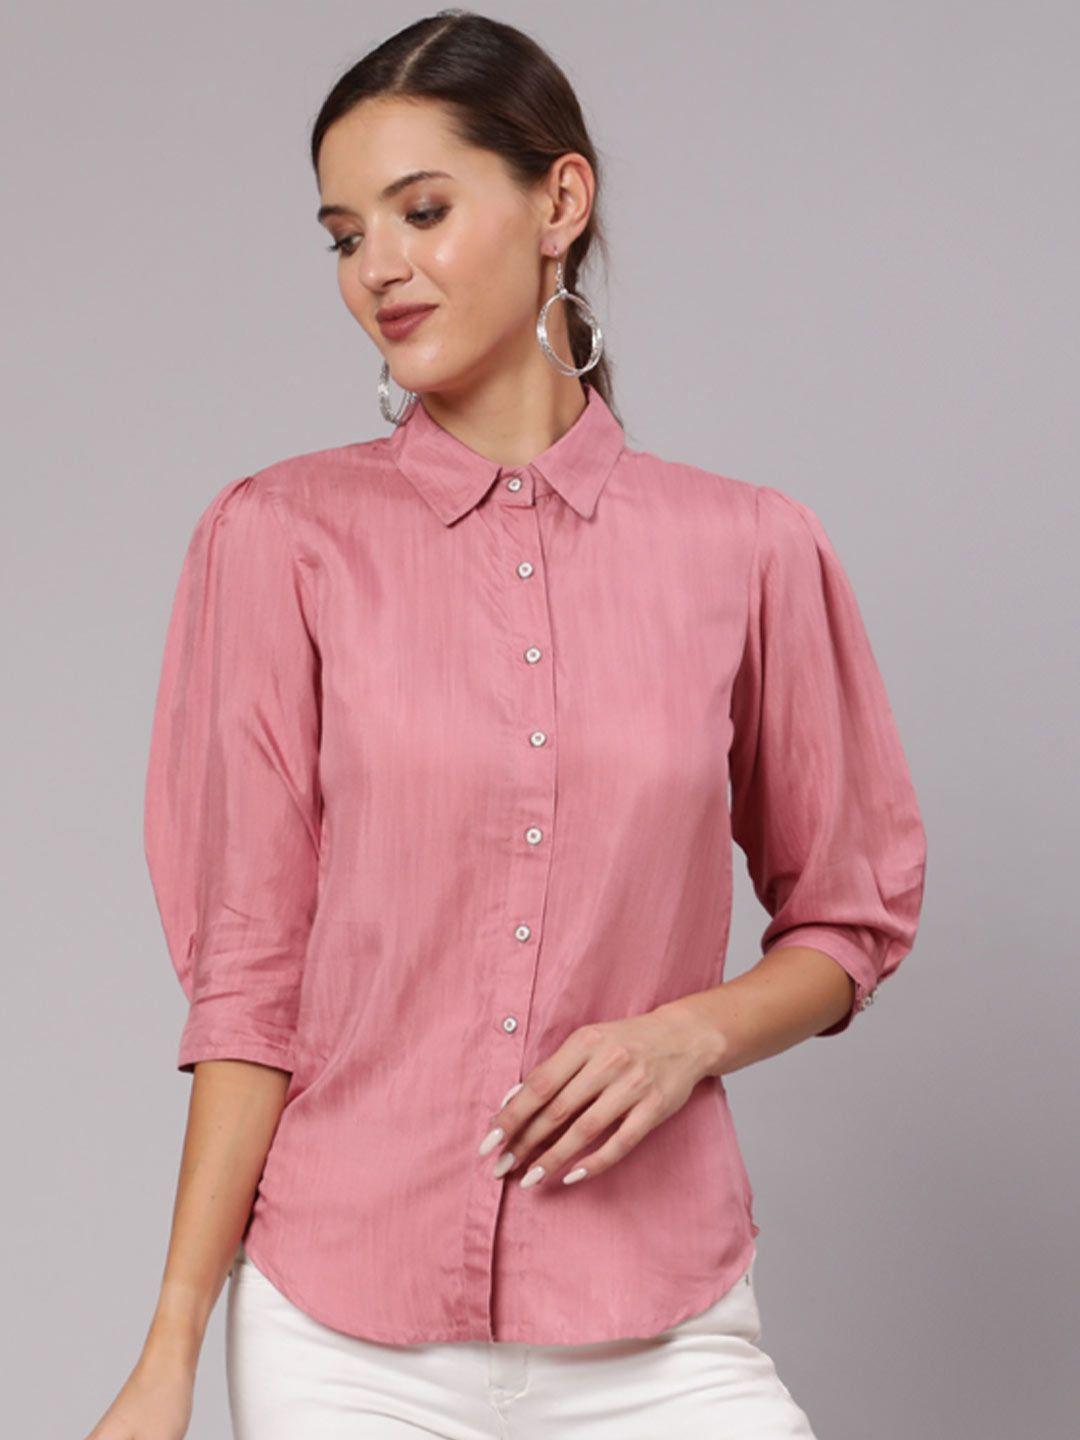 jaipur kurti women pink puffed sleeves casual shirt